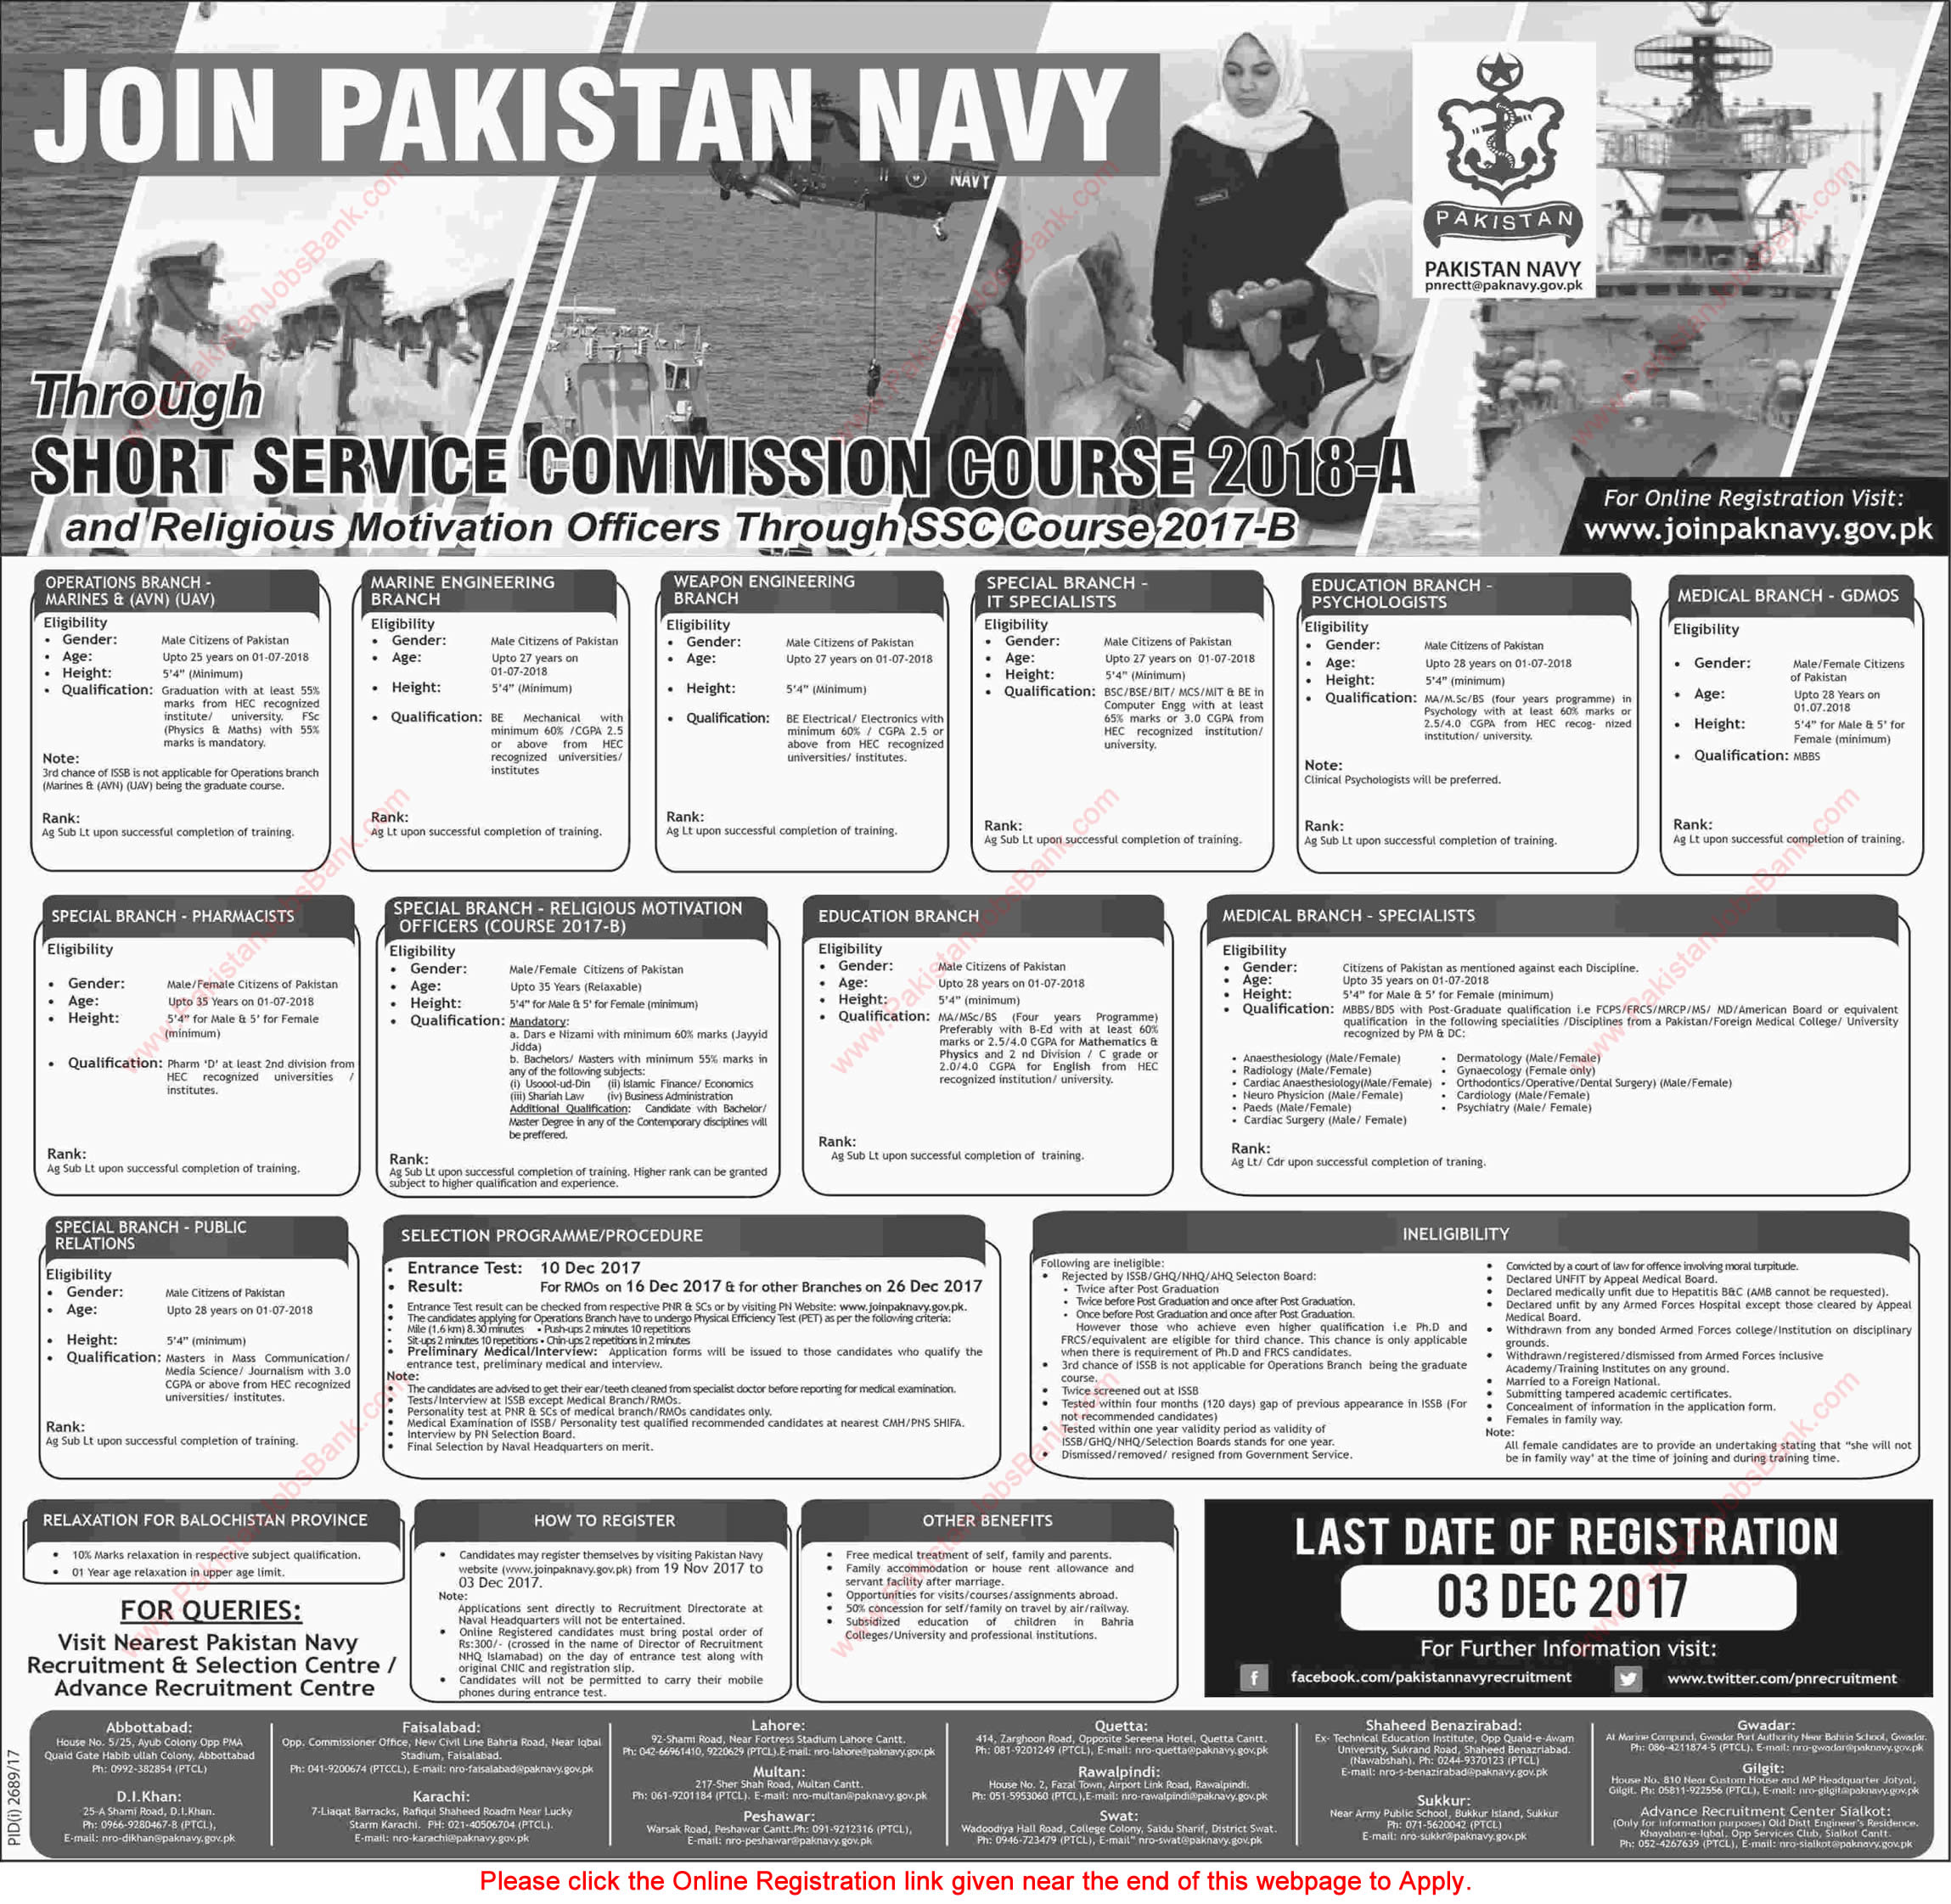 Join Pakistan Navy through Short Service Commission Course 2018-A Online Registration Latest